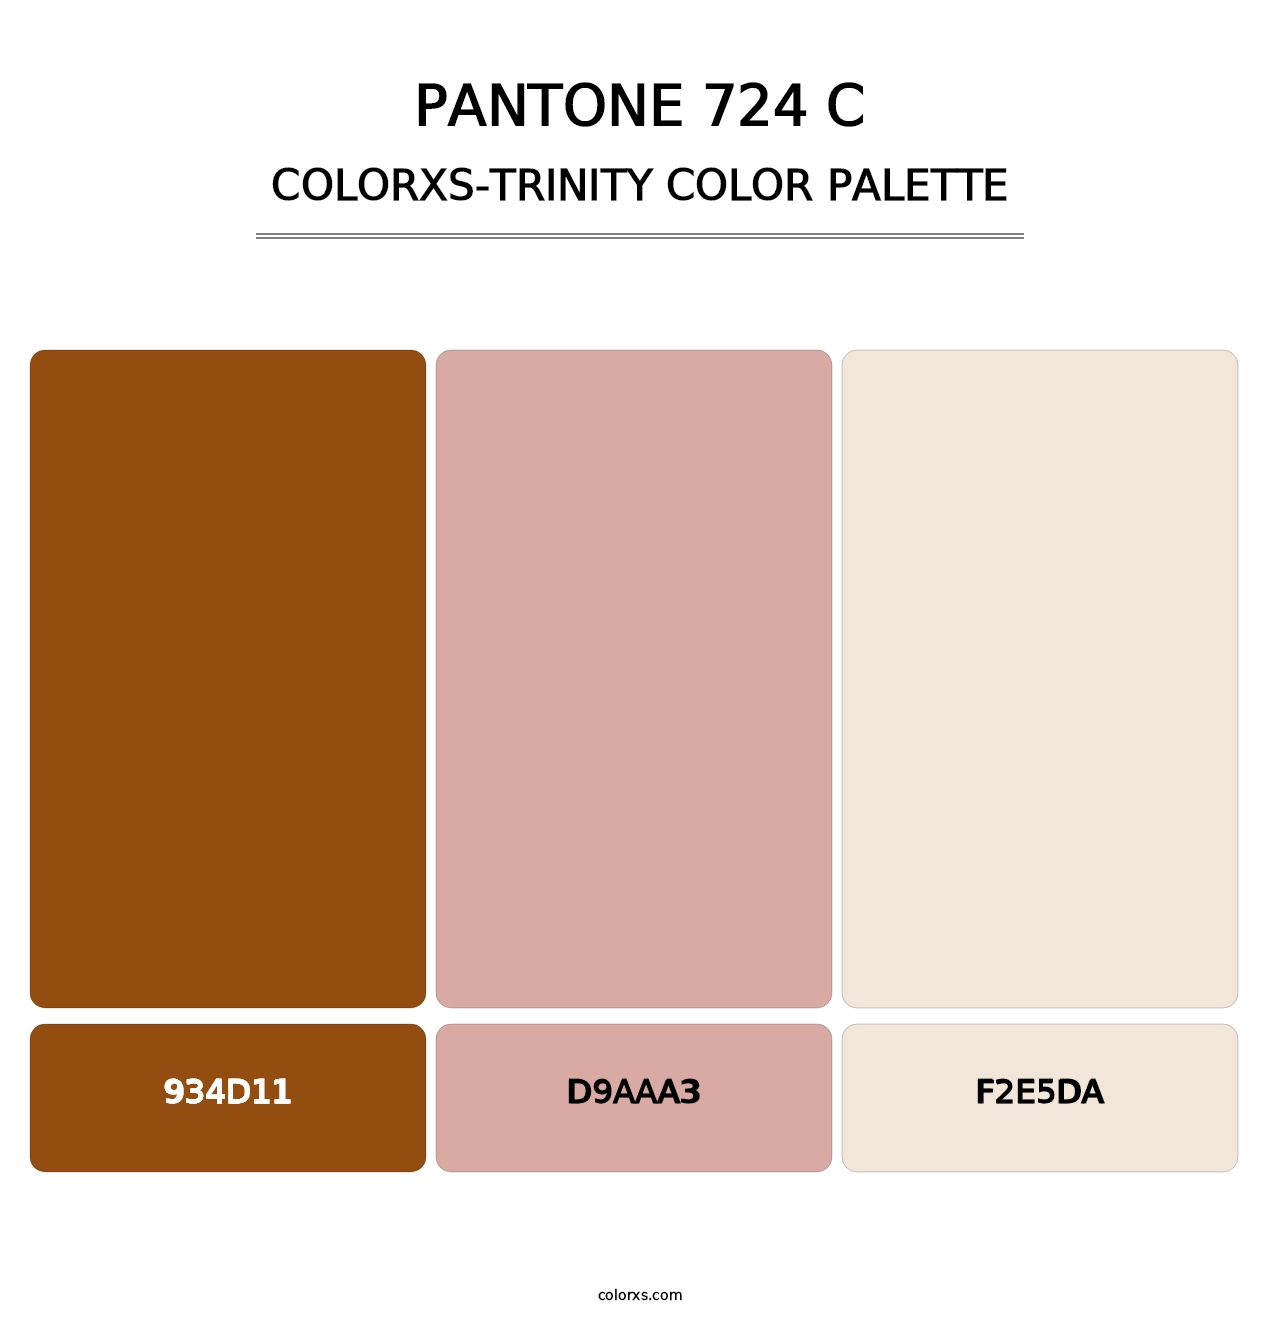 PANTONE 724 C - Colorxs Trinity Palette